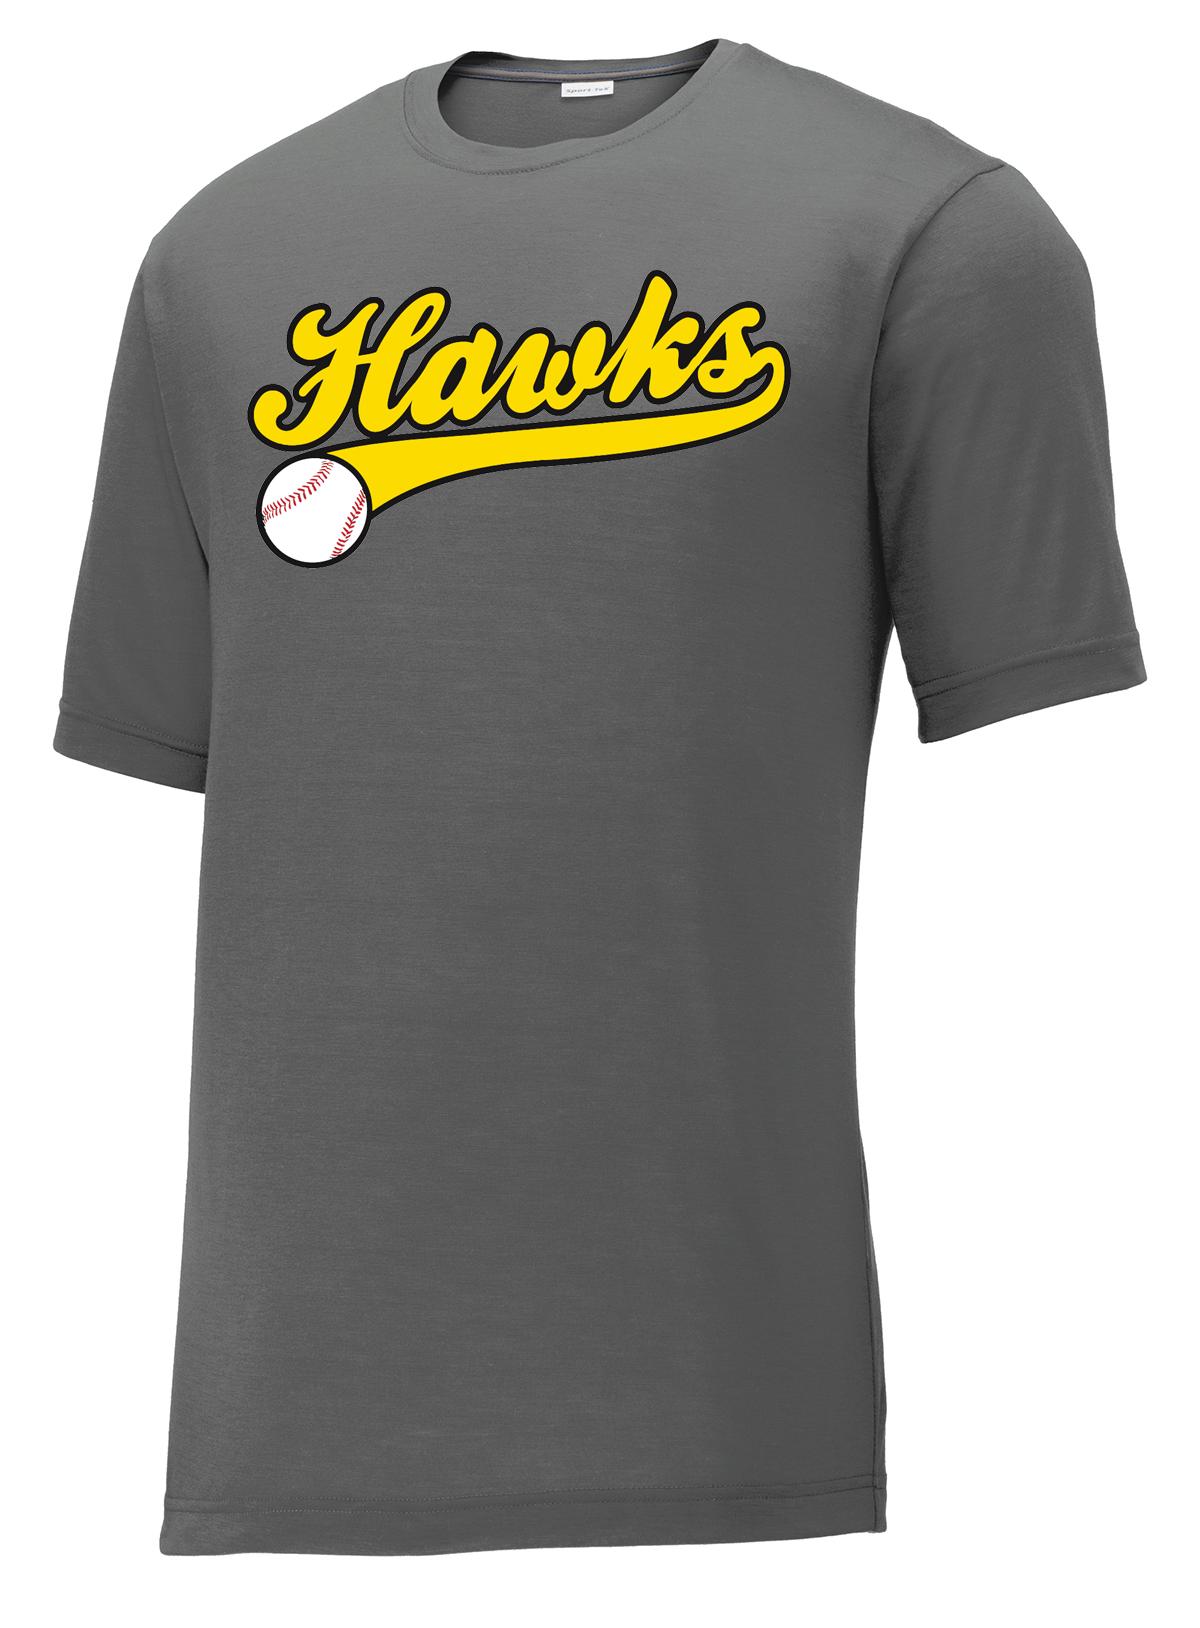 Hawks Baseball CottonTouch Performance T-Shirt